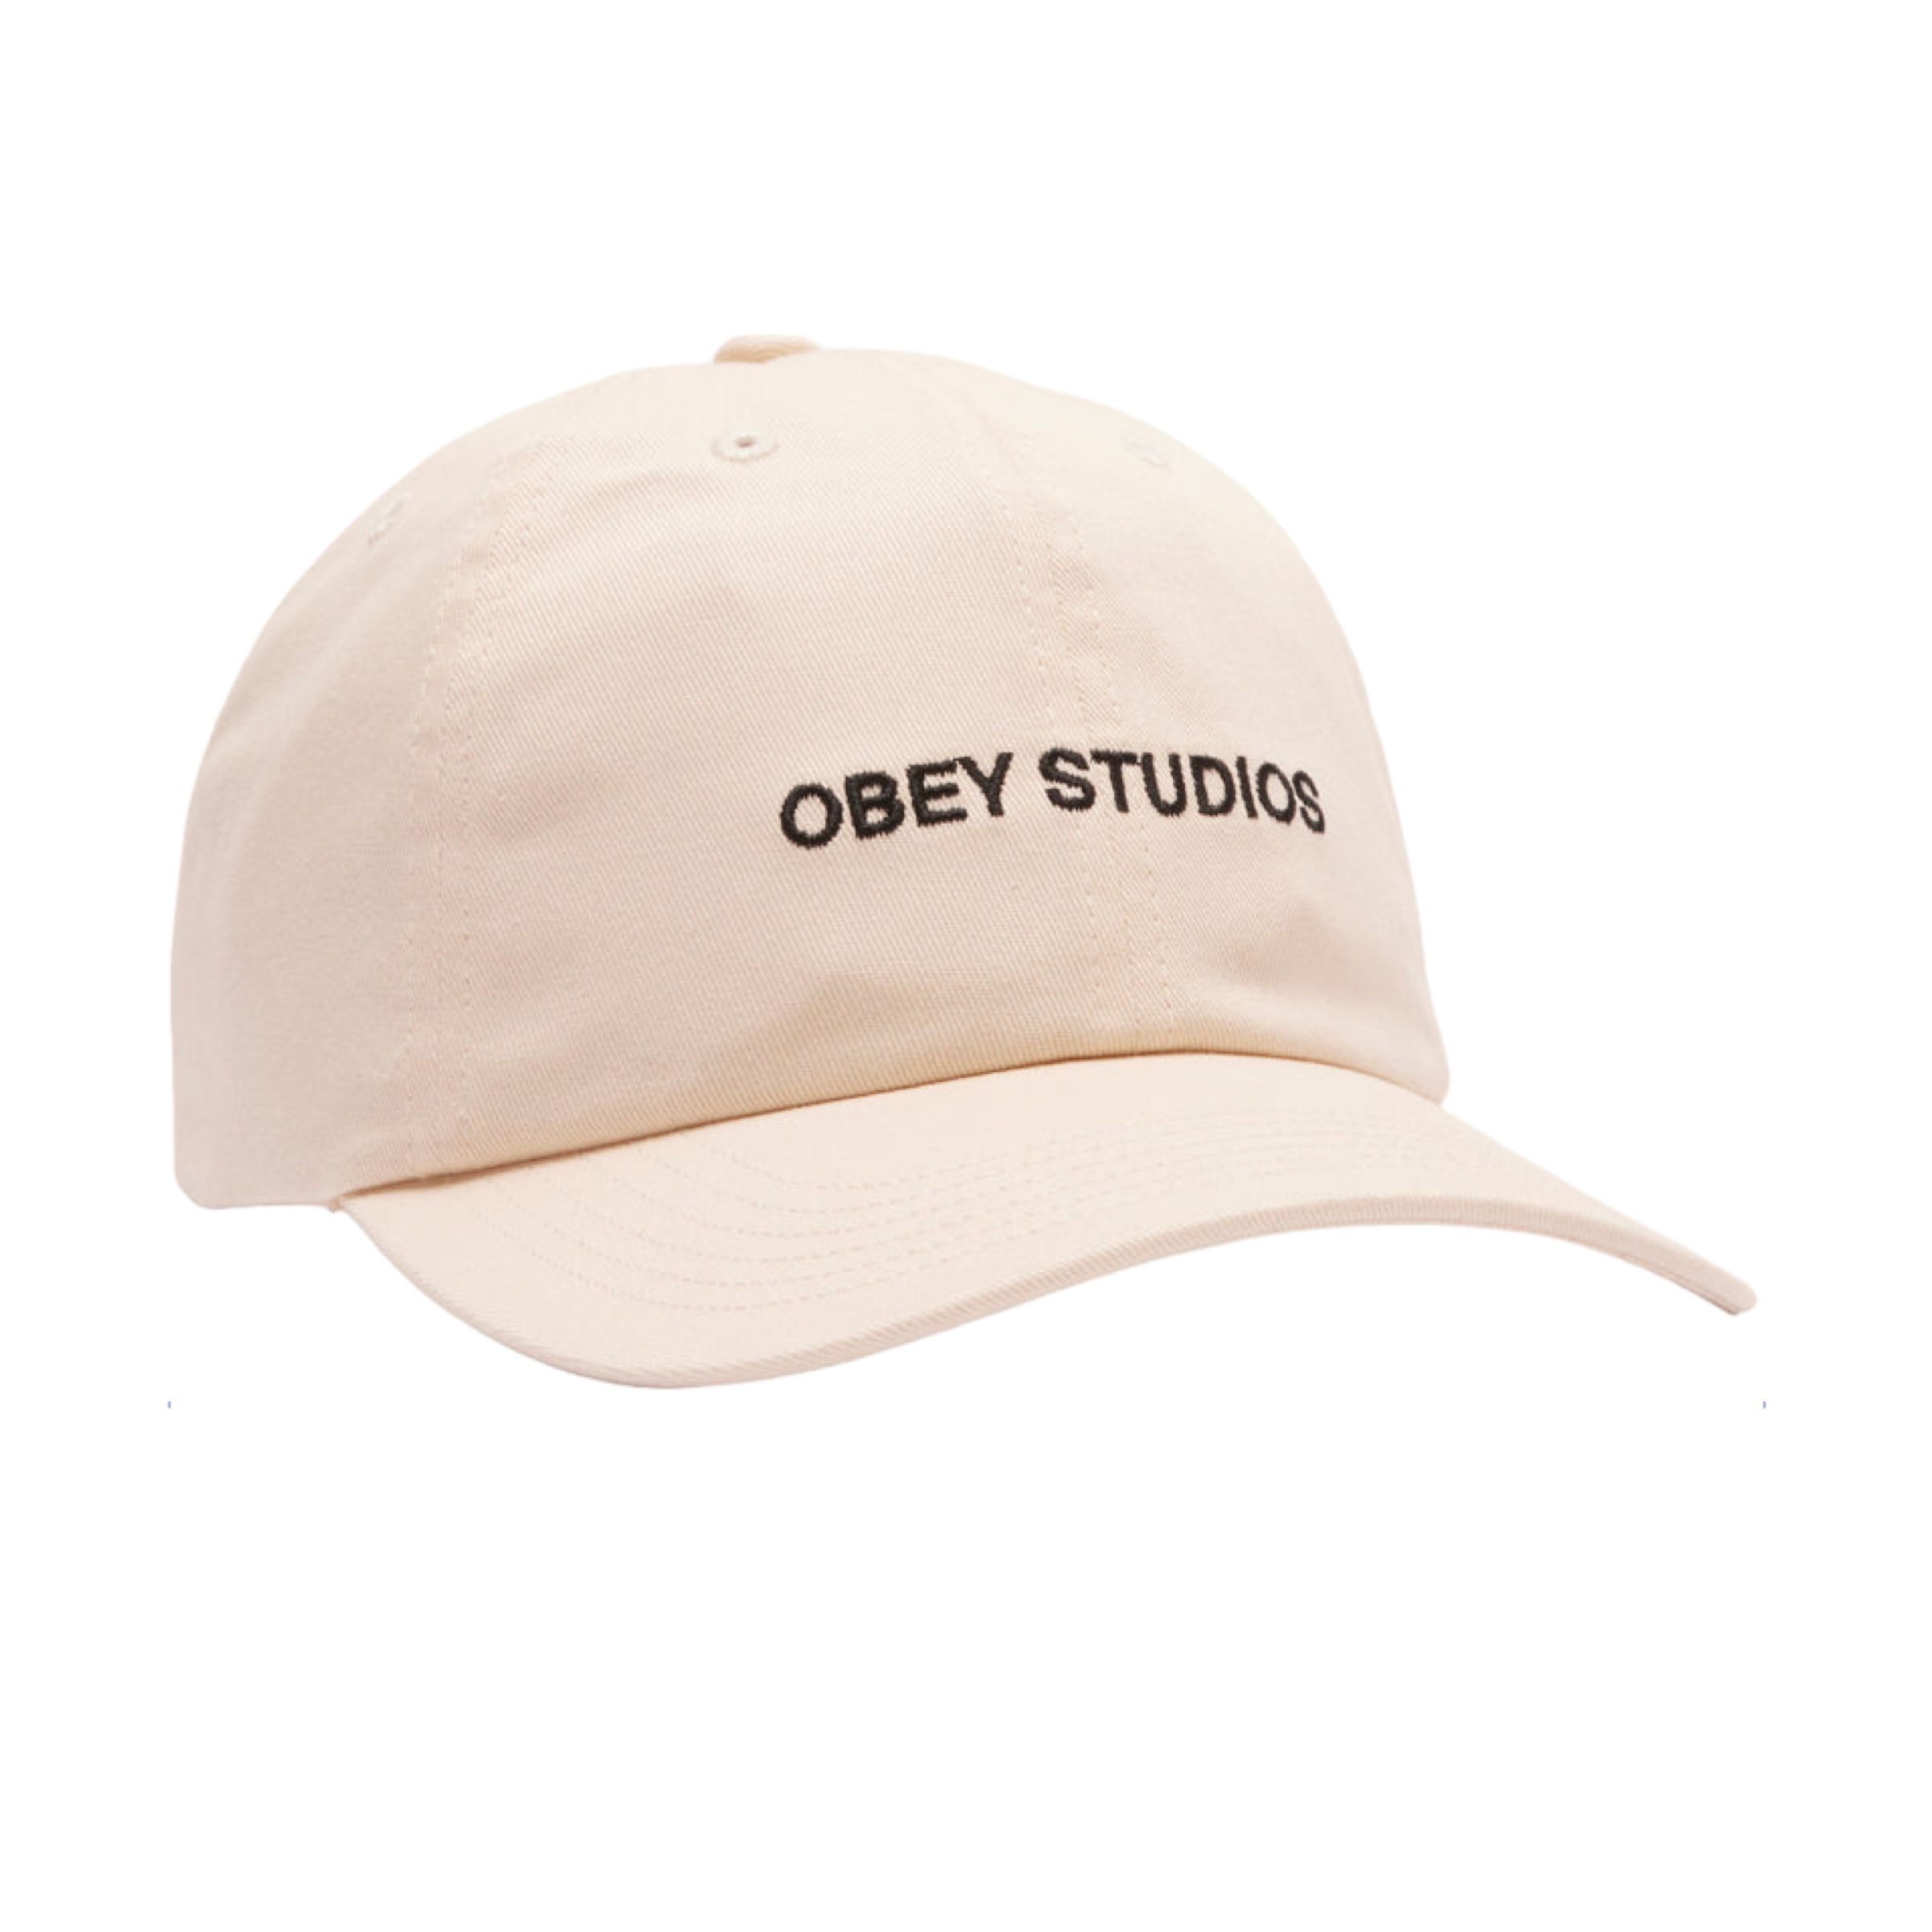 OBEY Studios Strap Back Hat (Unbleached)